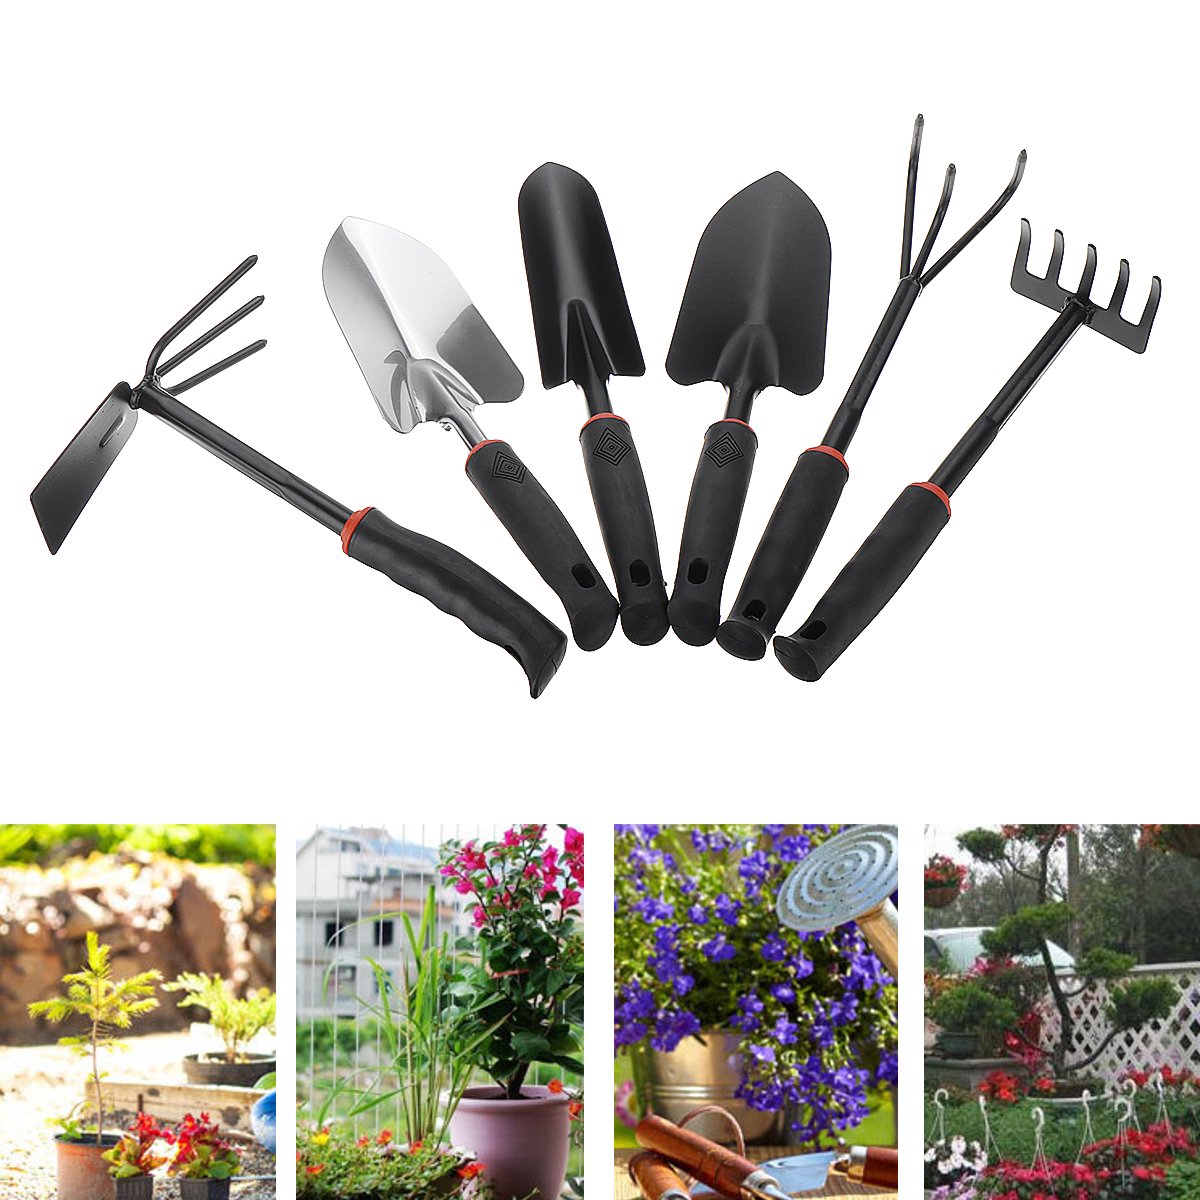 Useful gardening tools - 51 - Smart and Cool Stuff